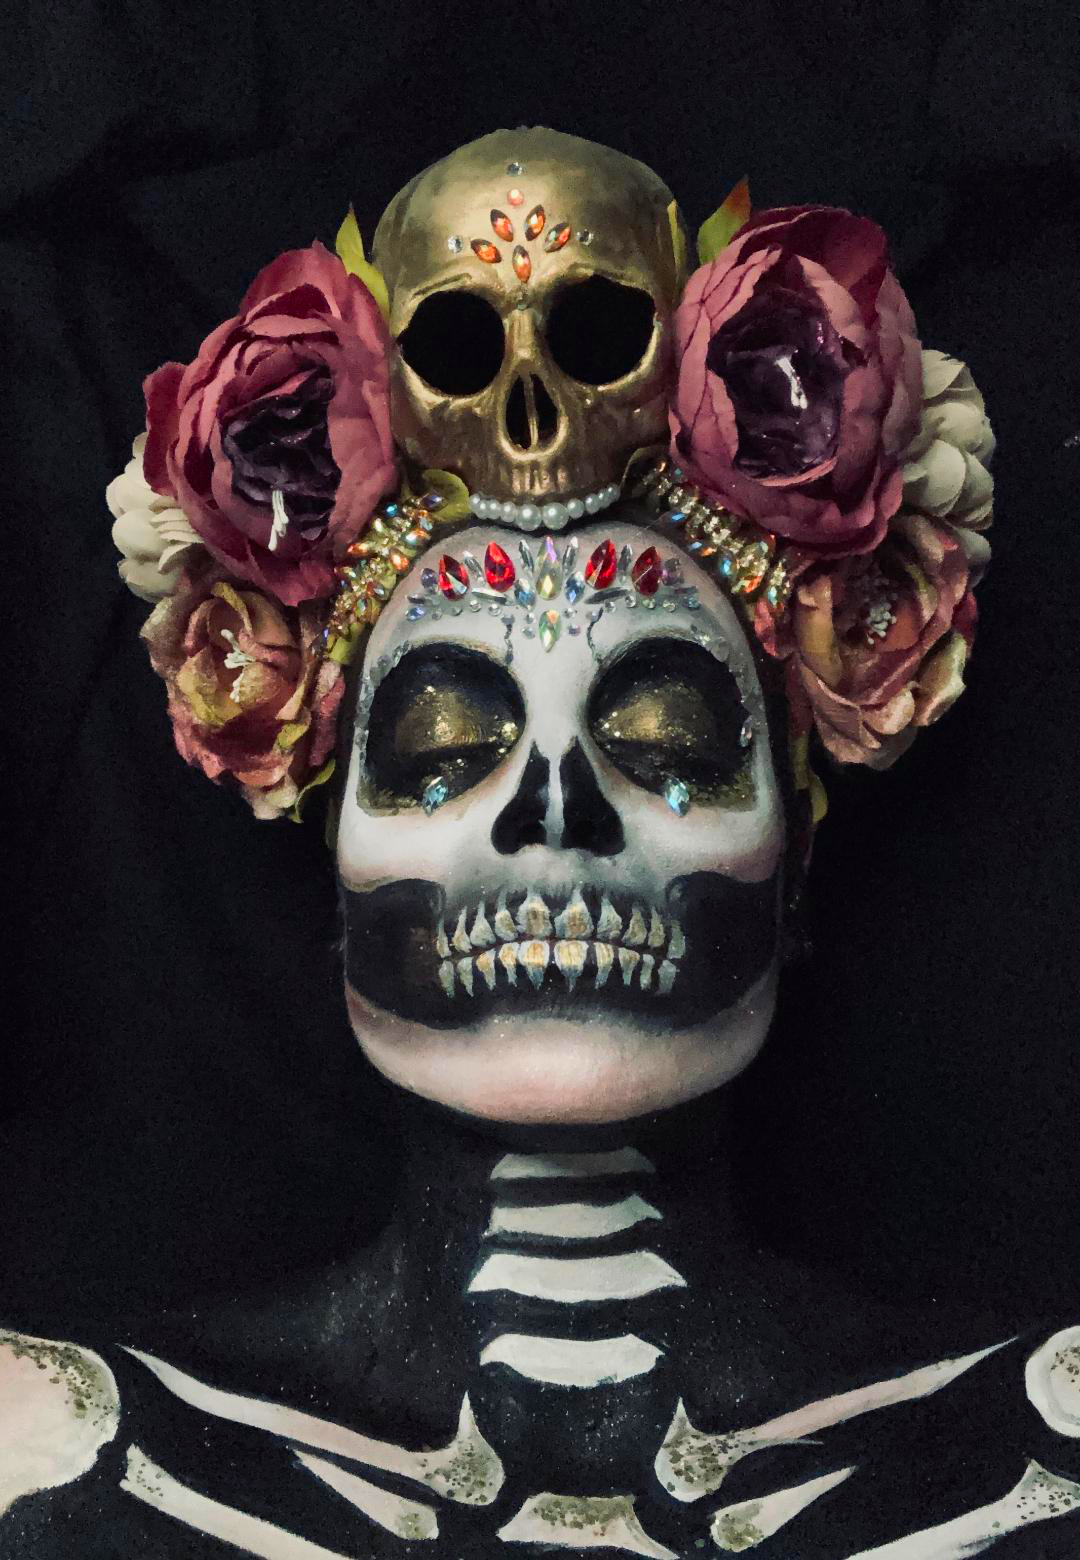 Skull-tress Halloween makeup with custom headdress.